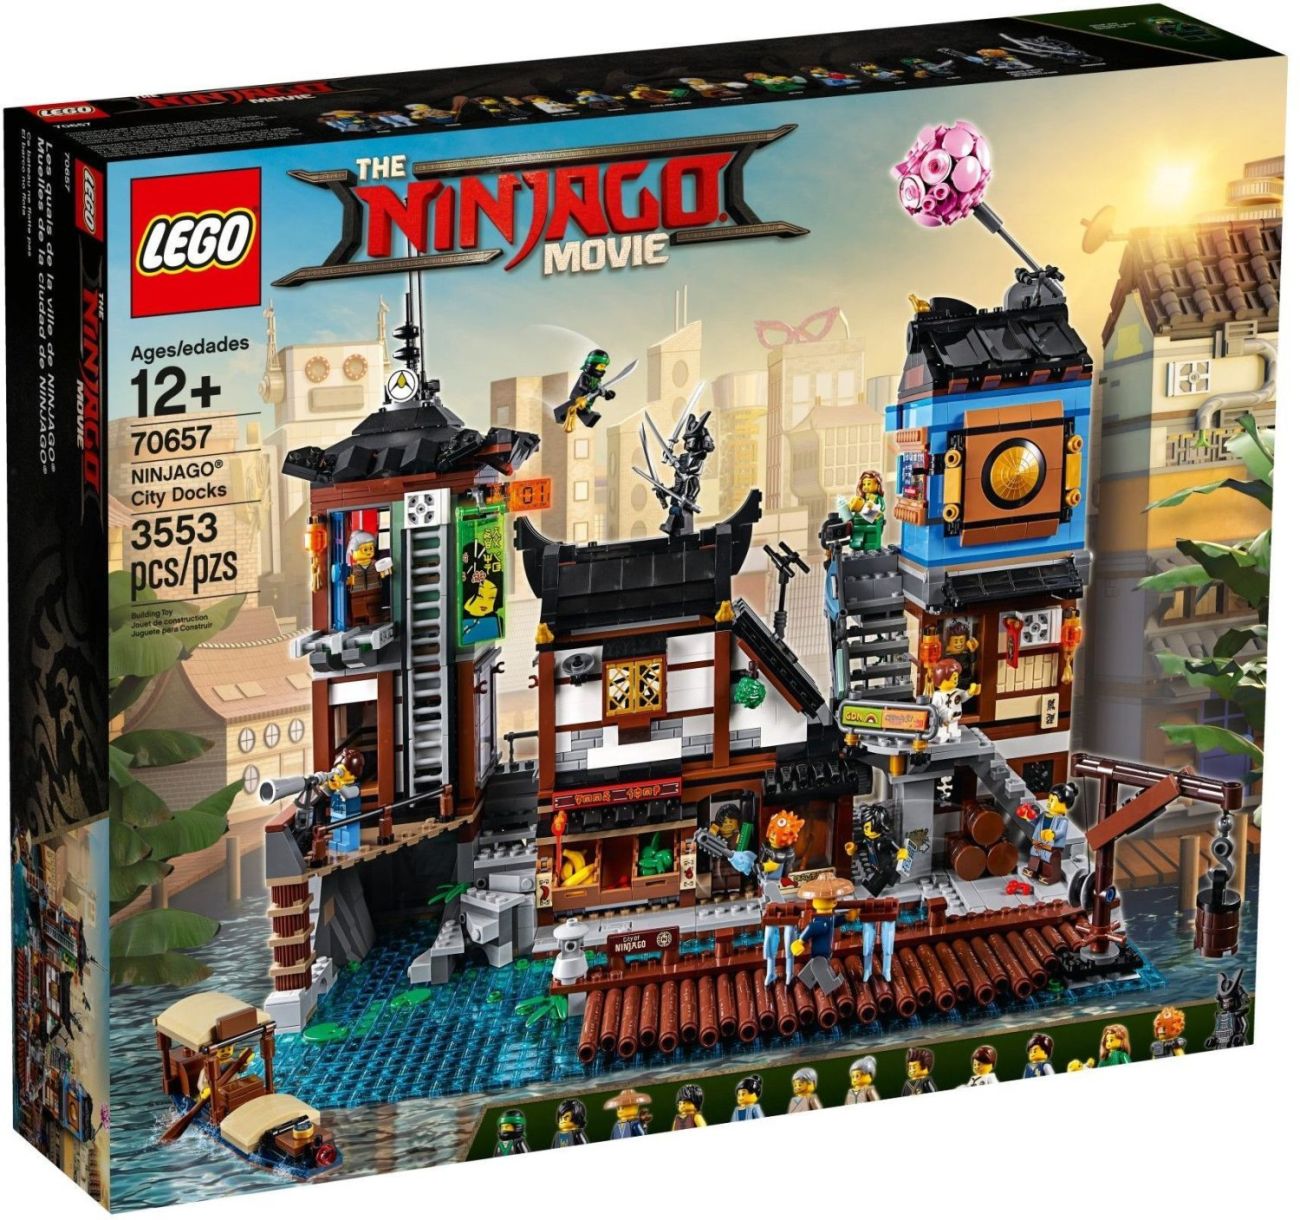 LEGO 71799 Ninjago City Markets: Größte LEGO Ninjago City Erweiterung kommt im Sommer